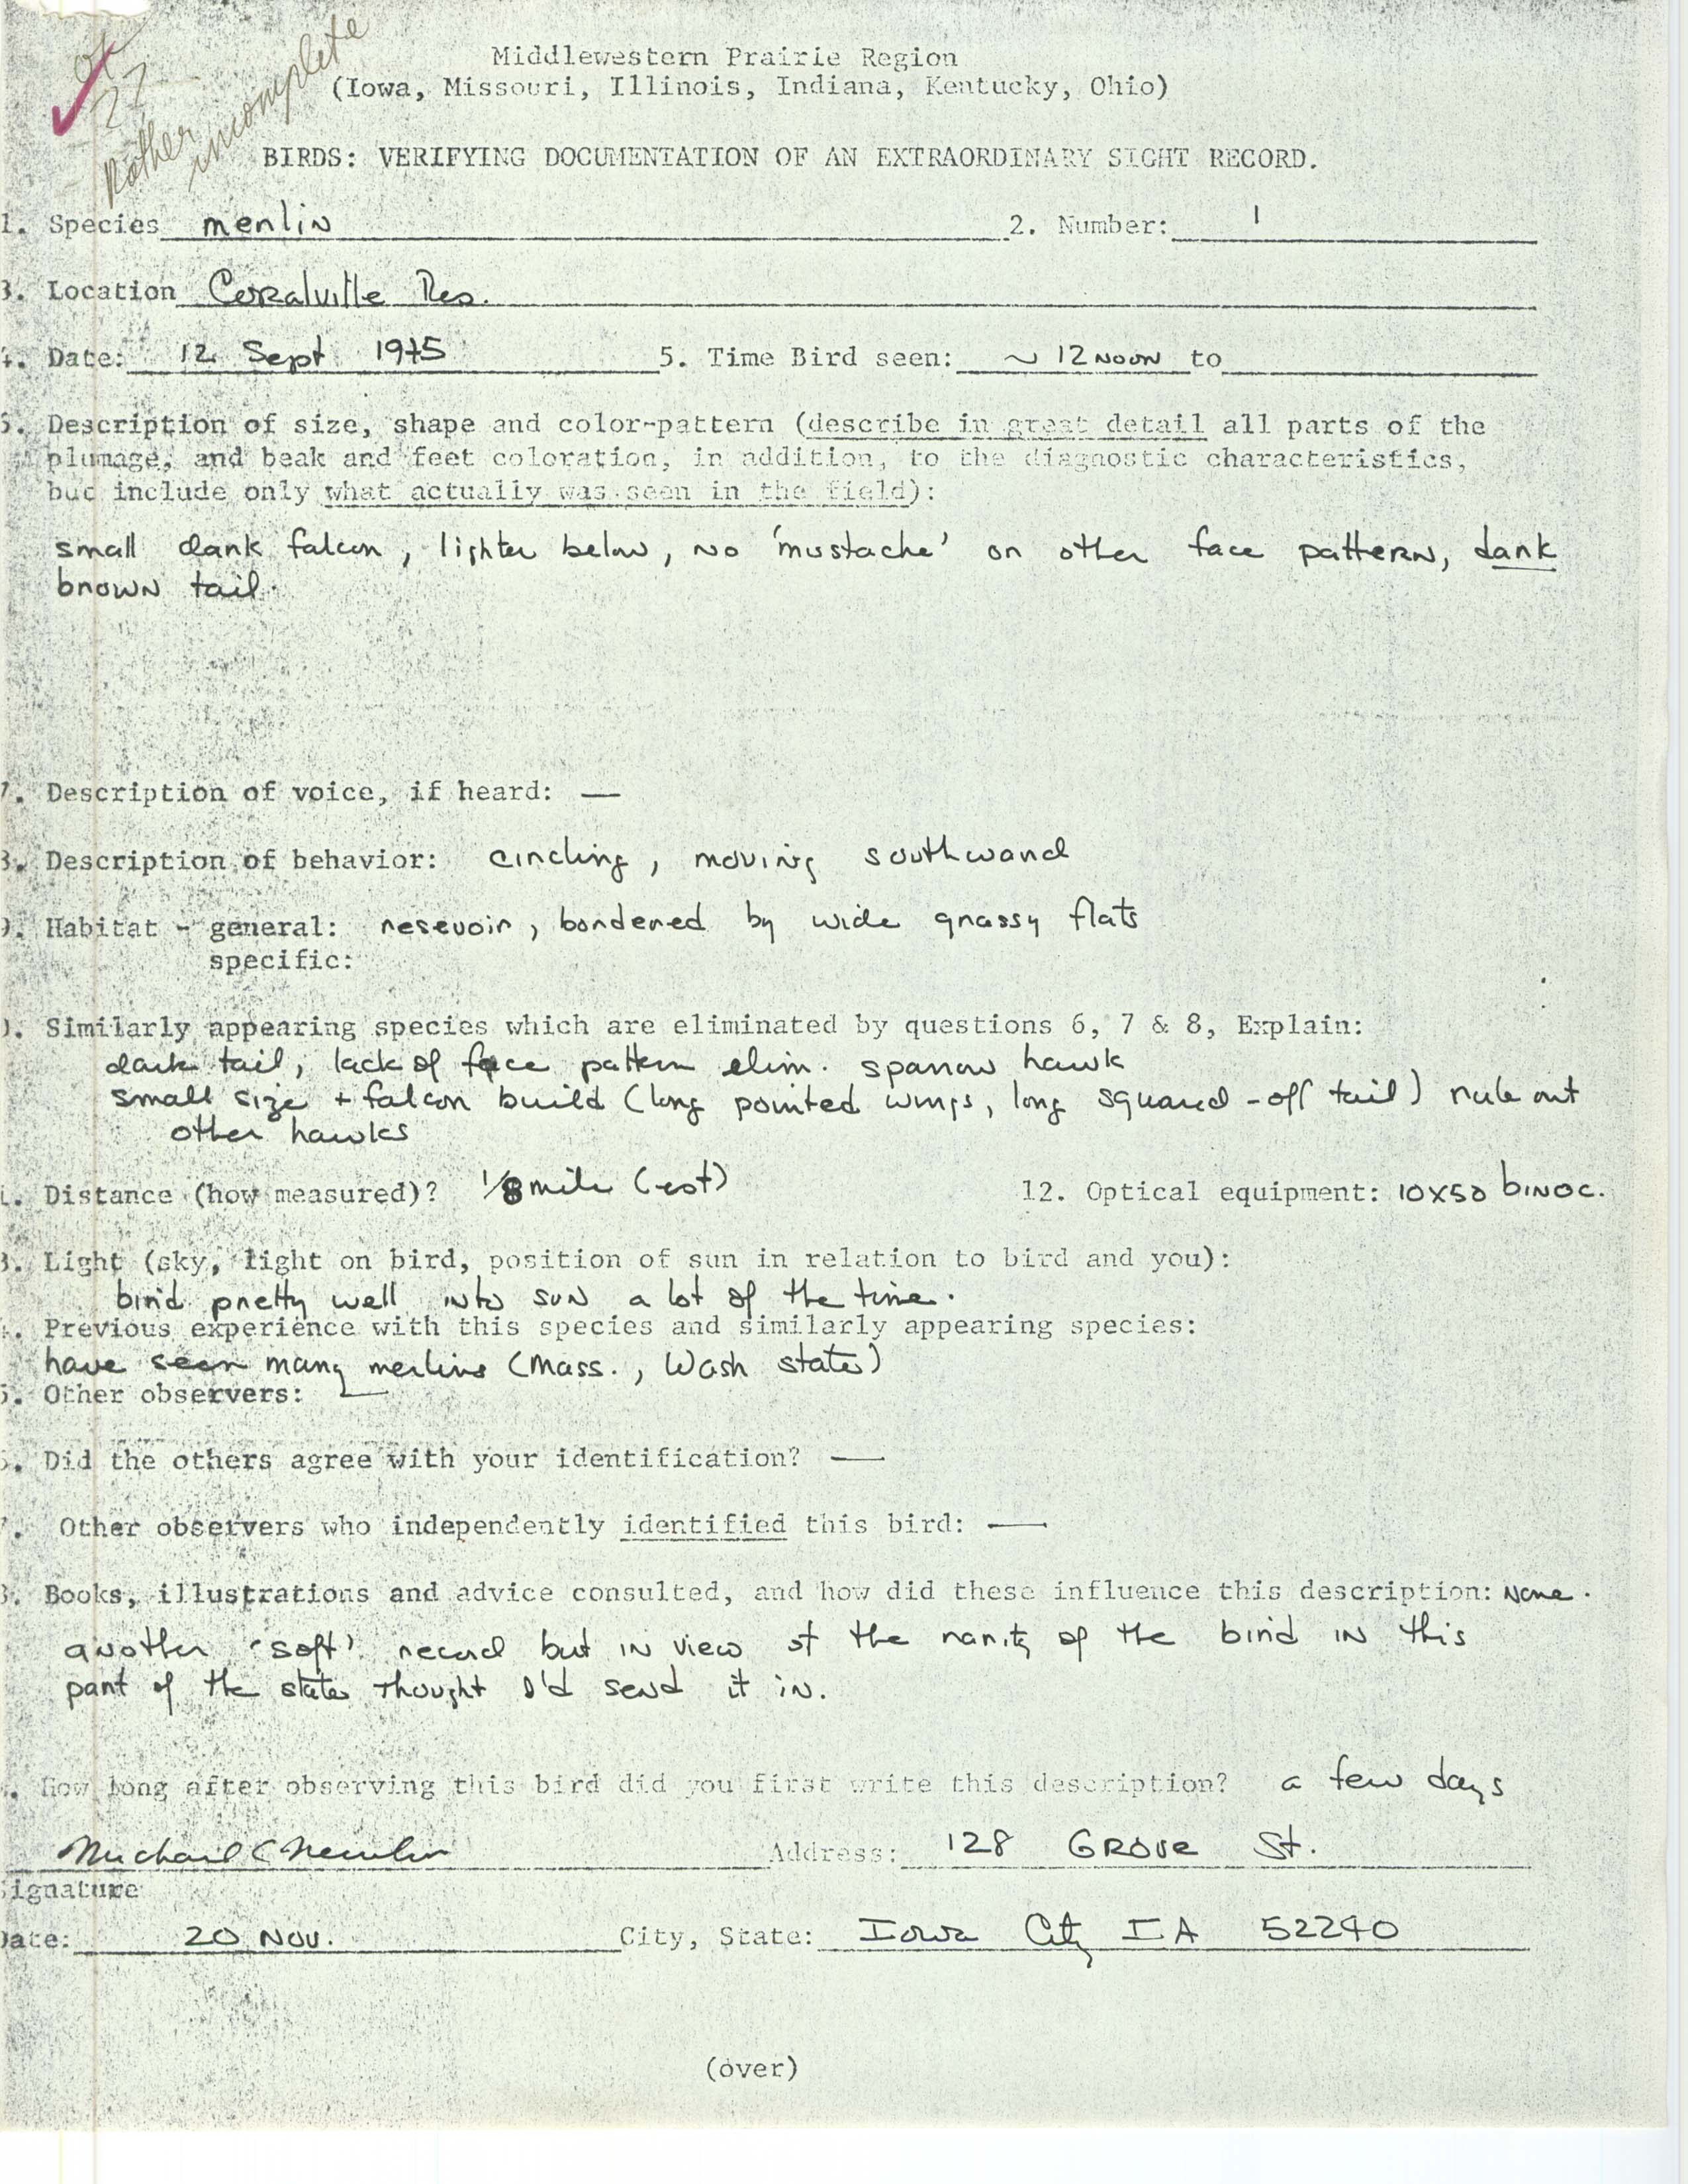 Rare bird documentation form for Merlin at Coralville Reservoir, 1975